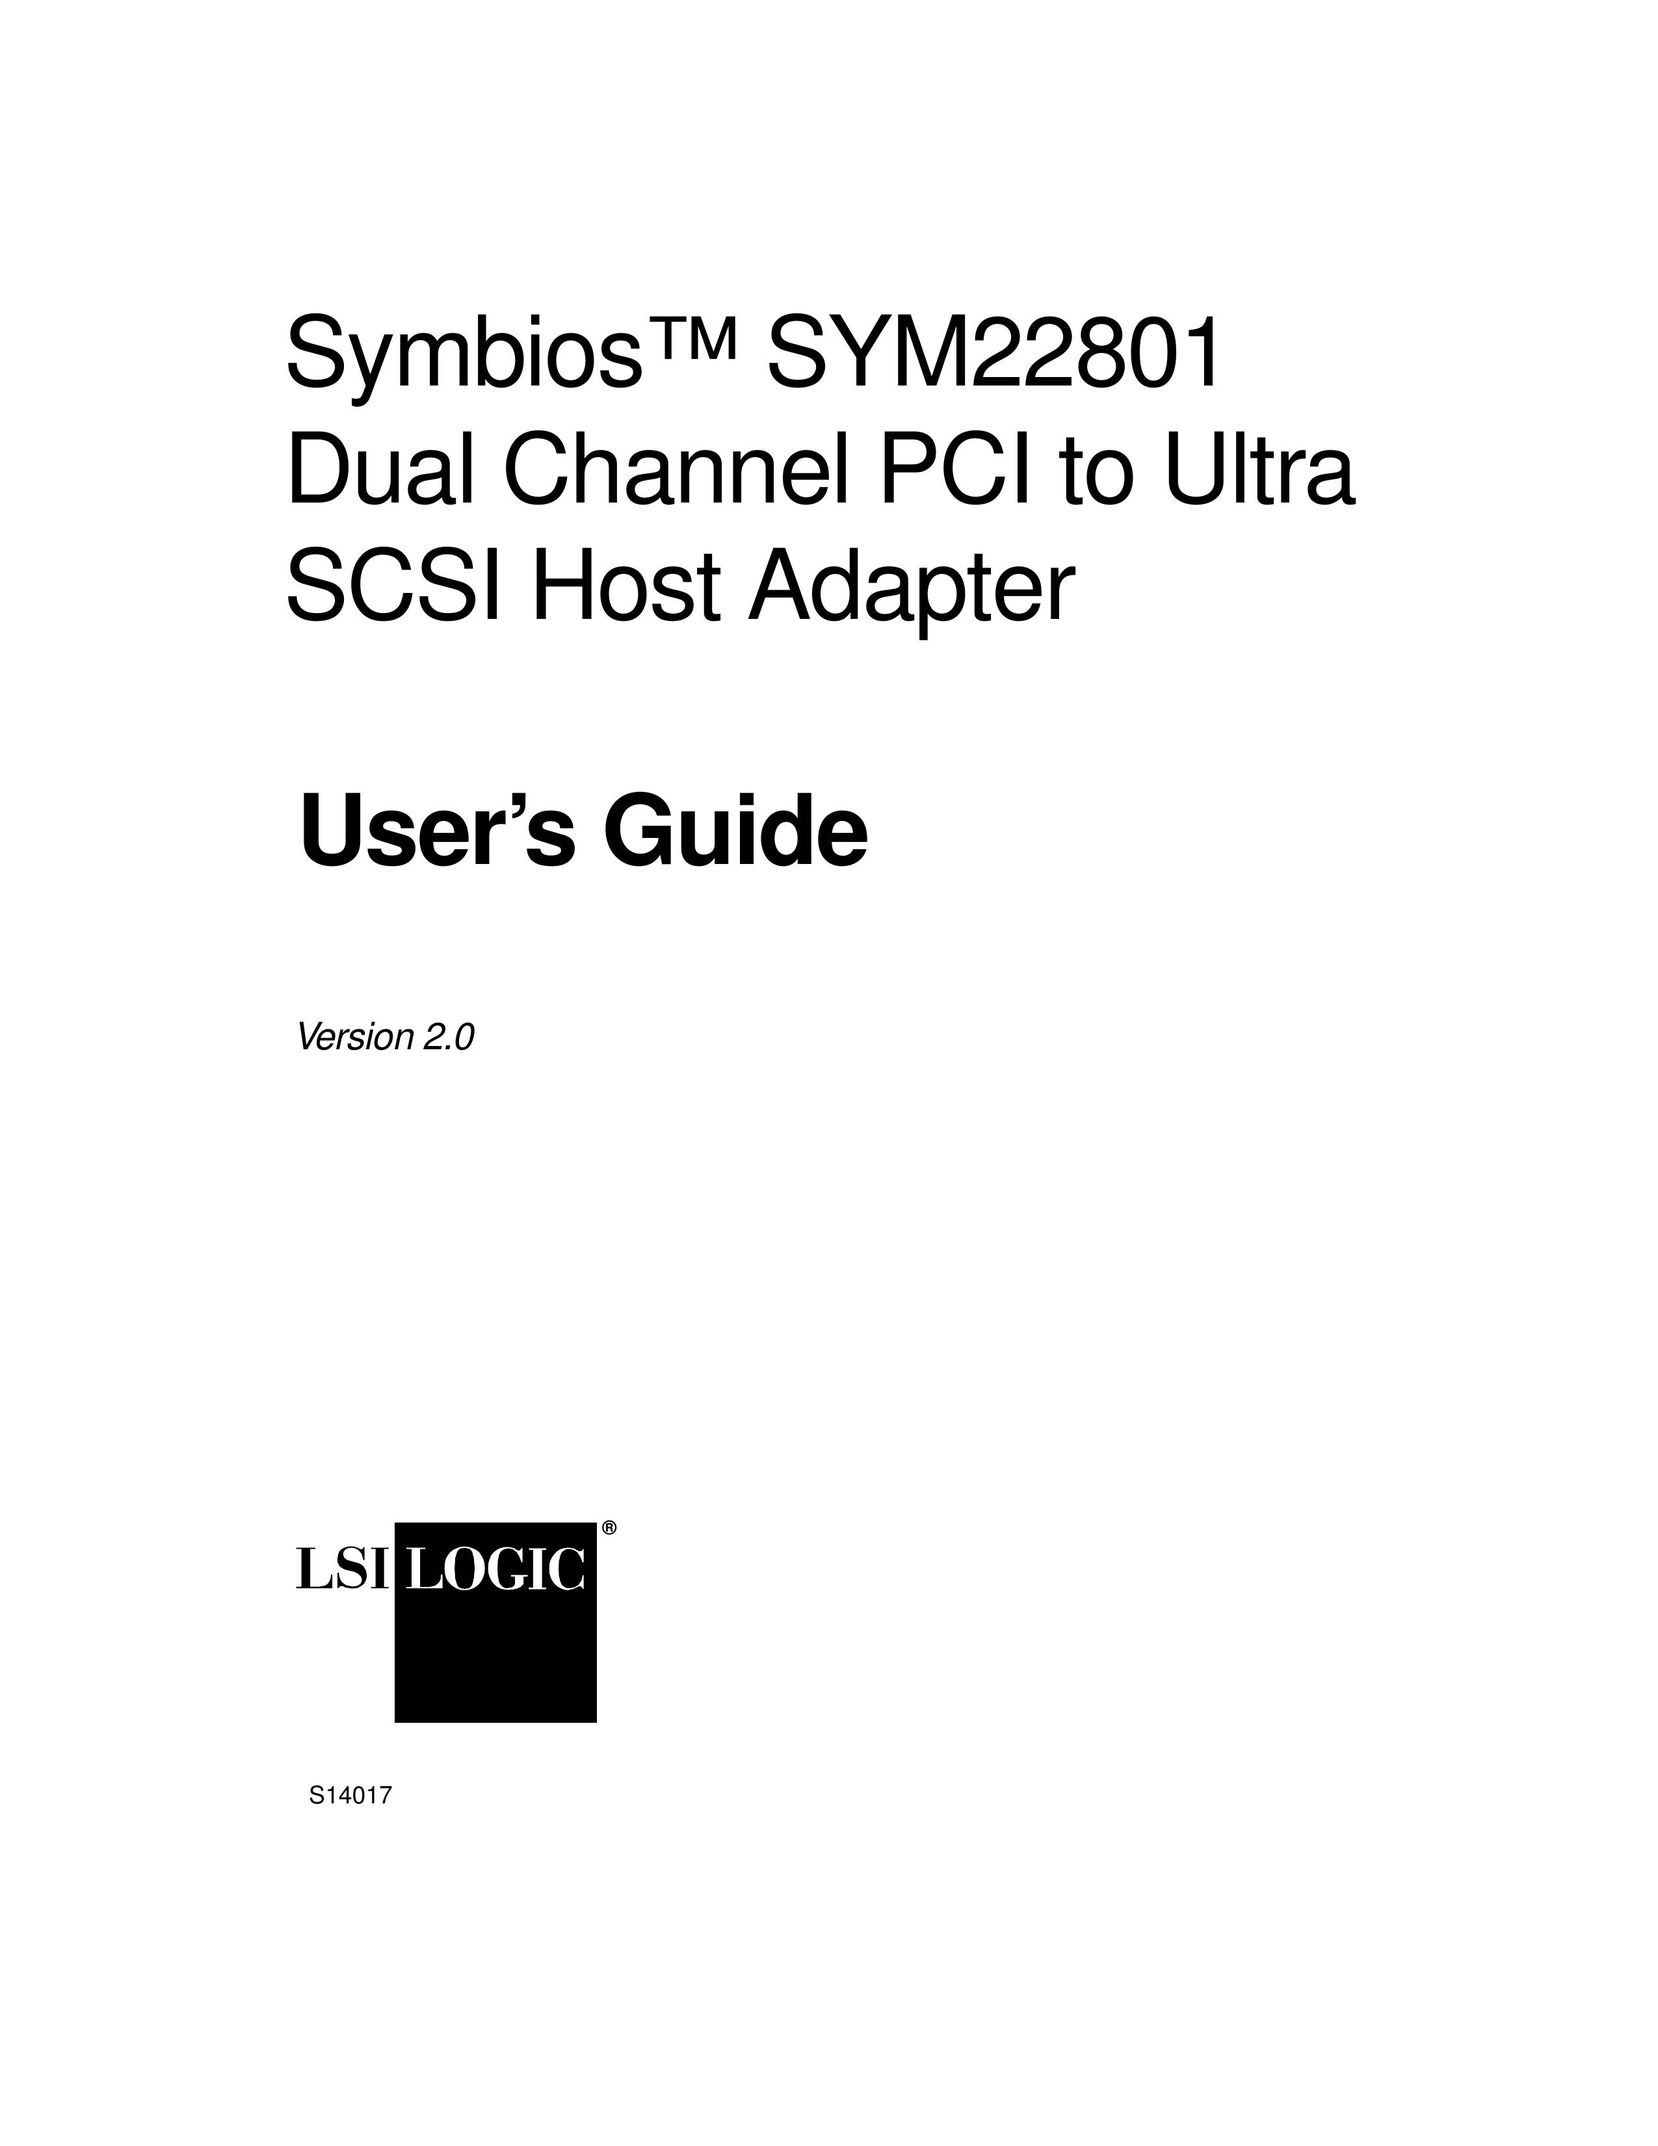 LSI SYM22801 Network Card User Manual